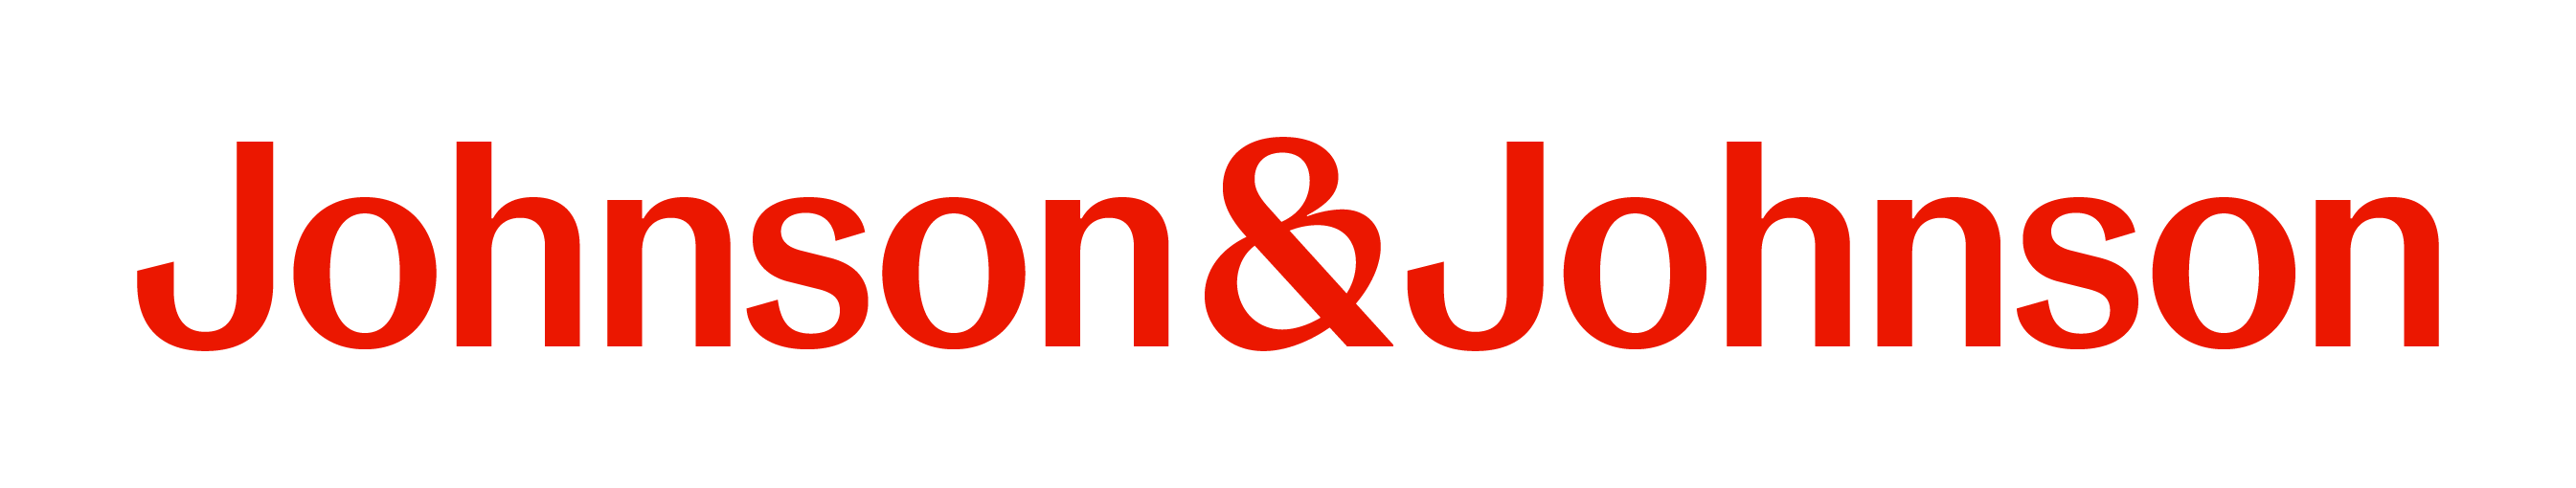 Johnson & Johnson Logo (Medium)